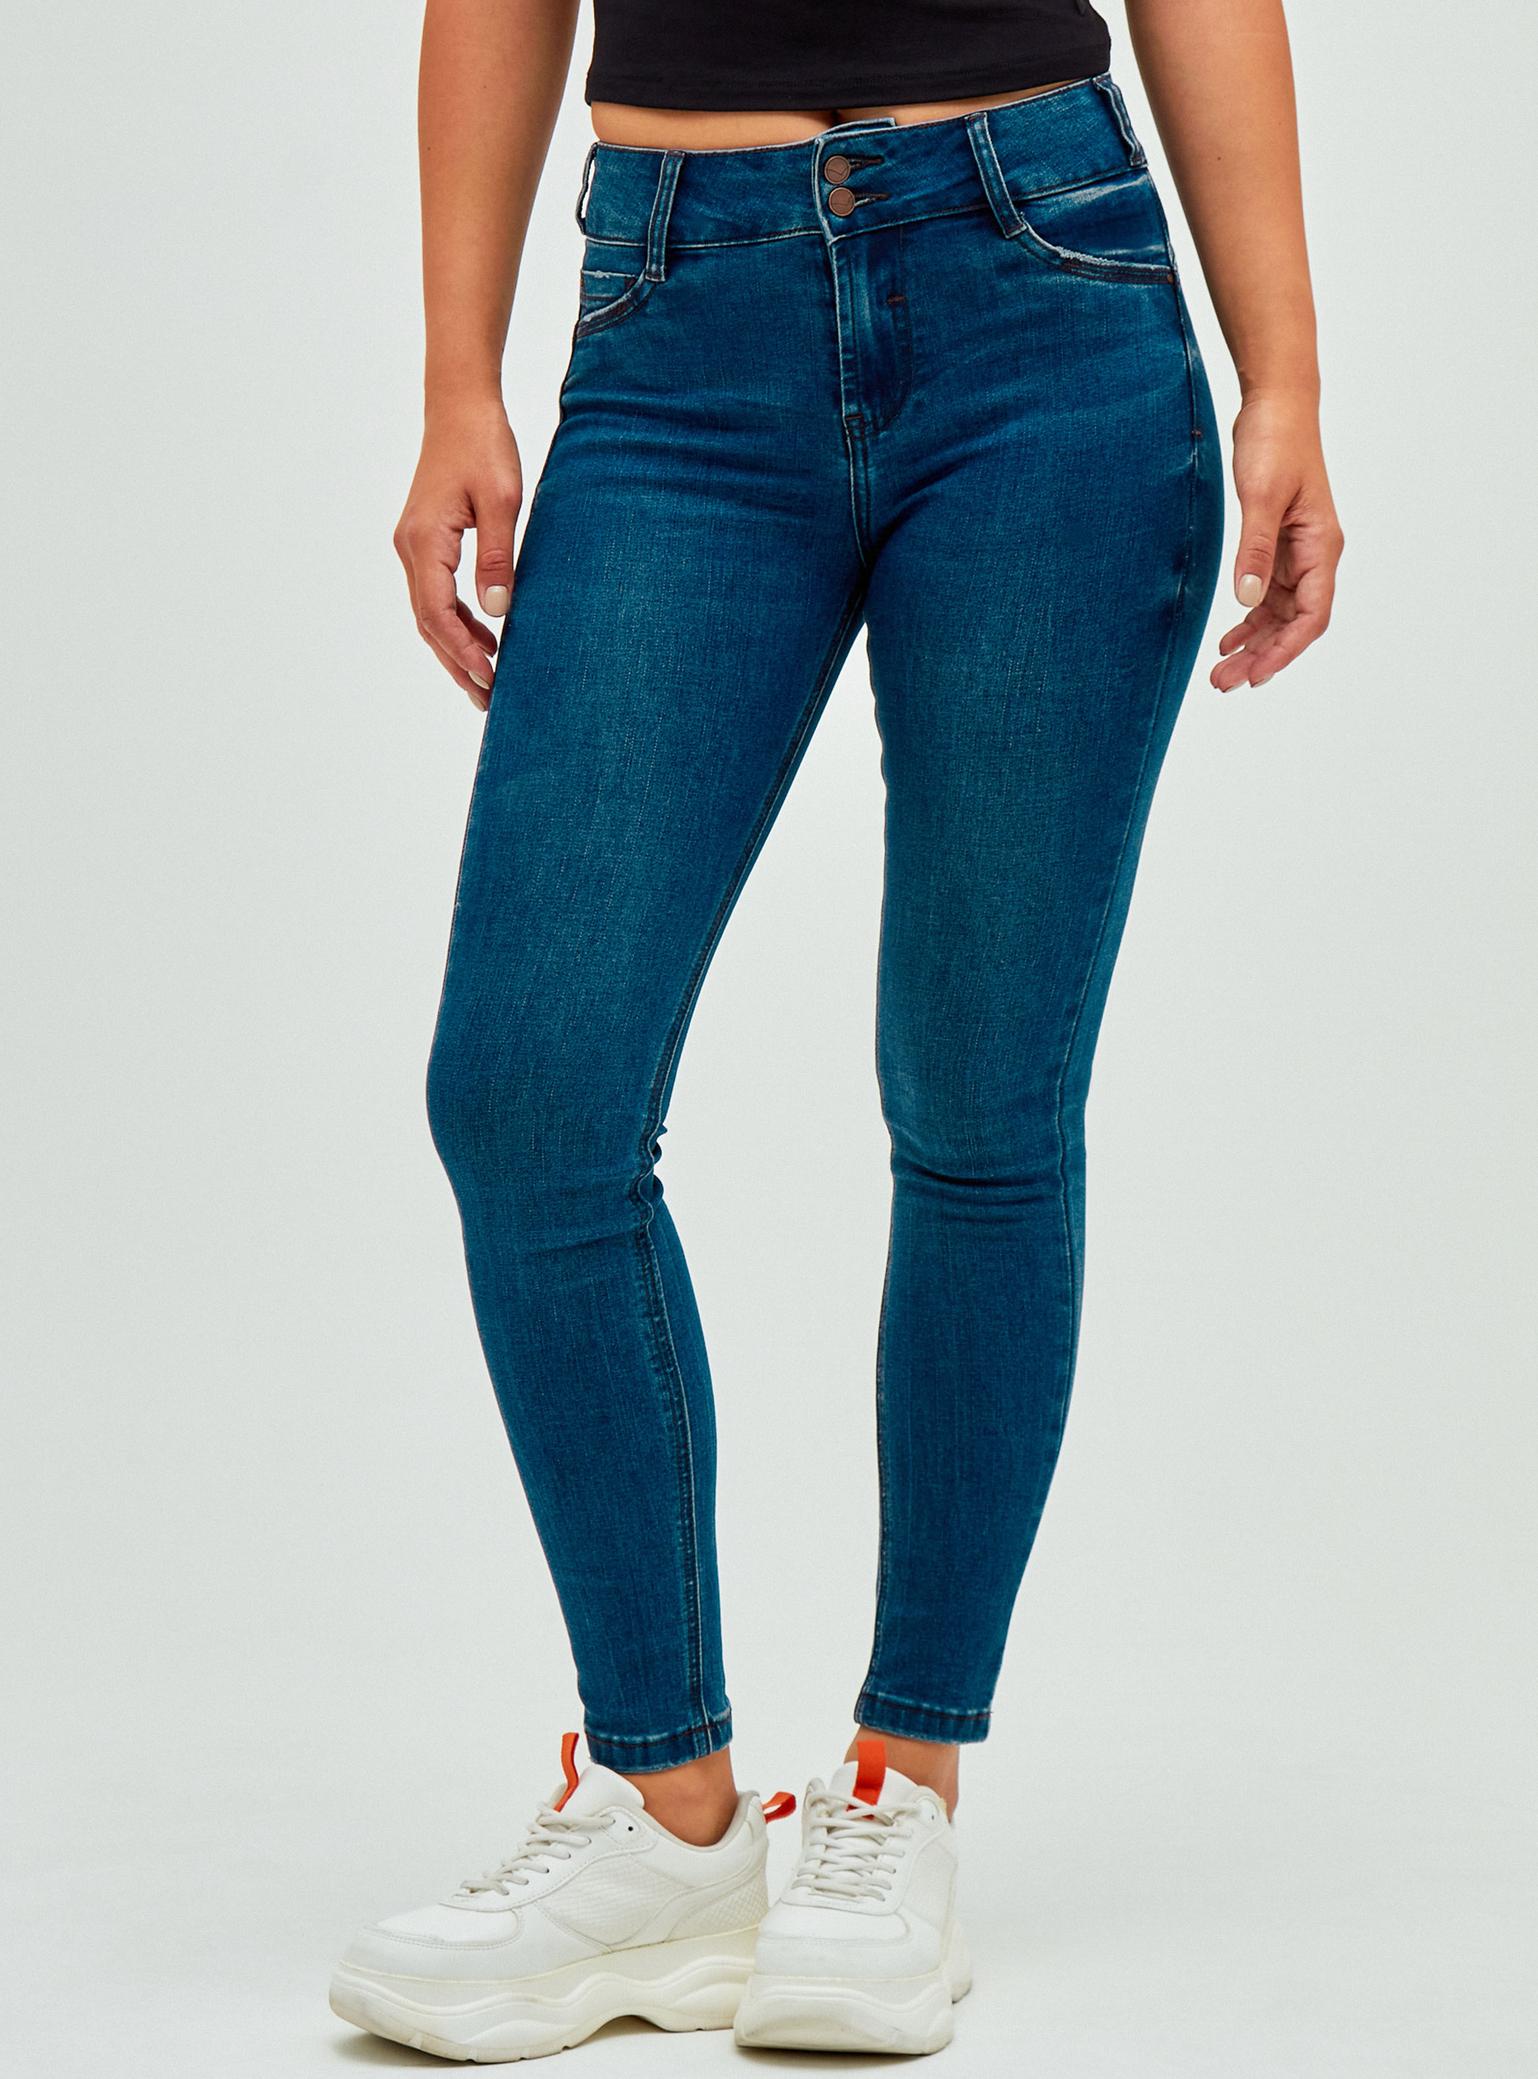 Oferta de Jeans Skinny Push Basico Up por $10490 en Paris